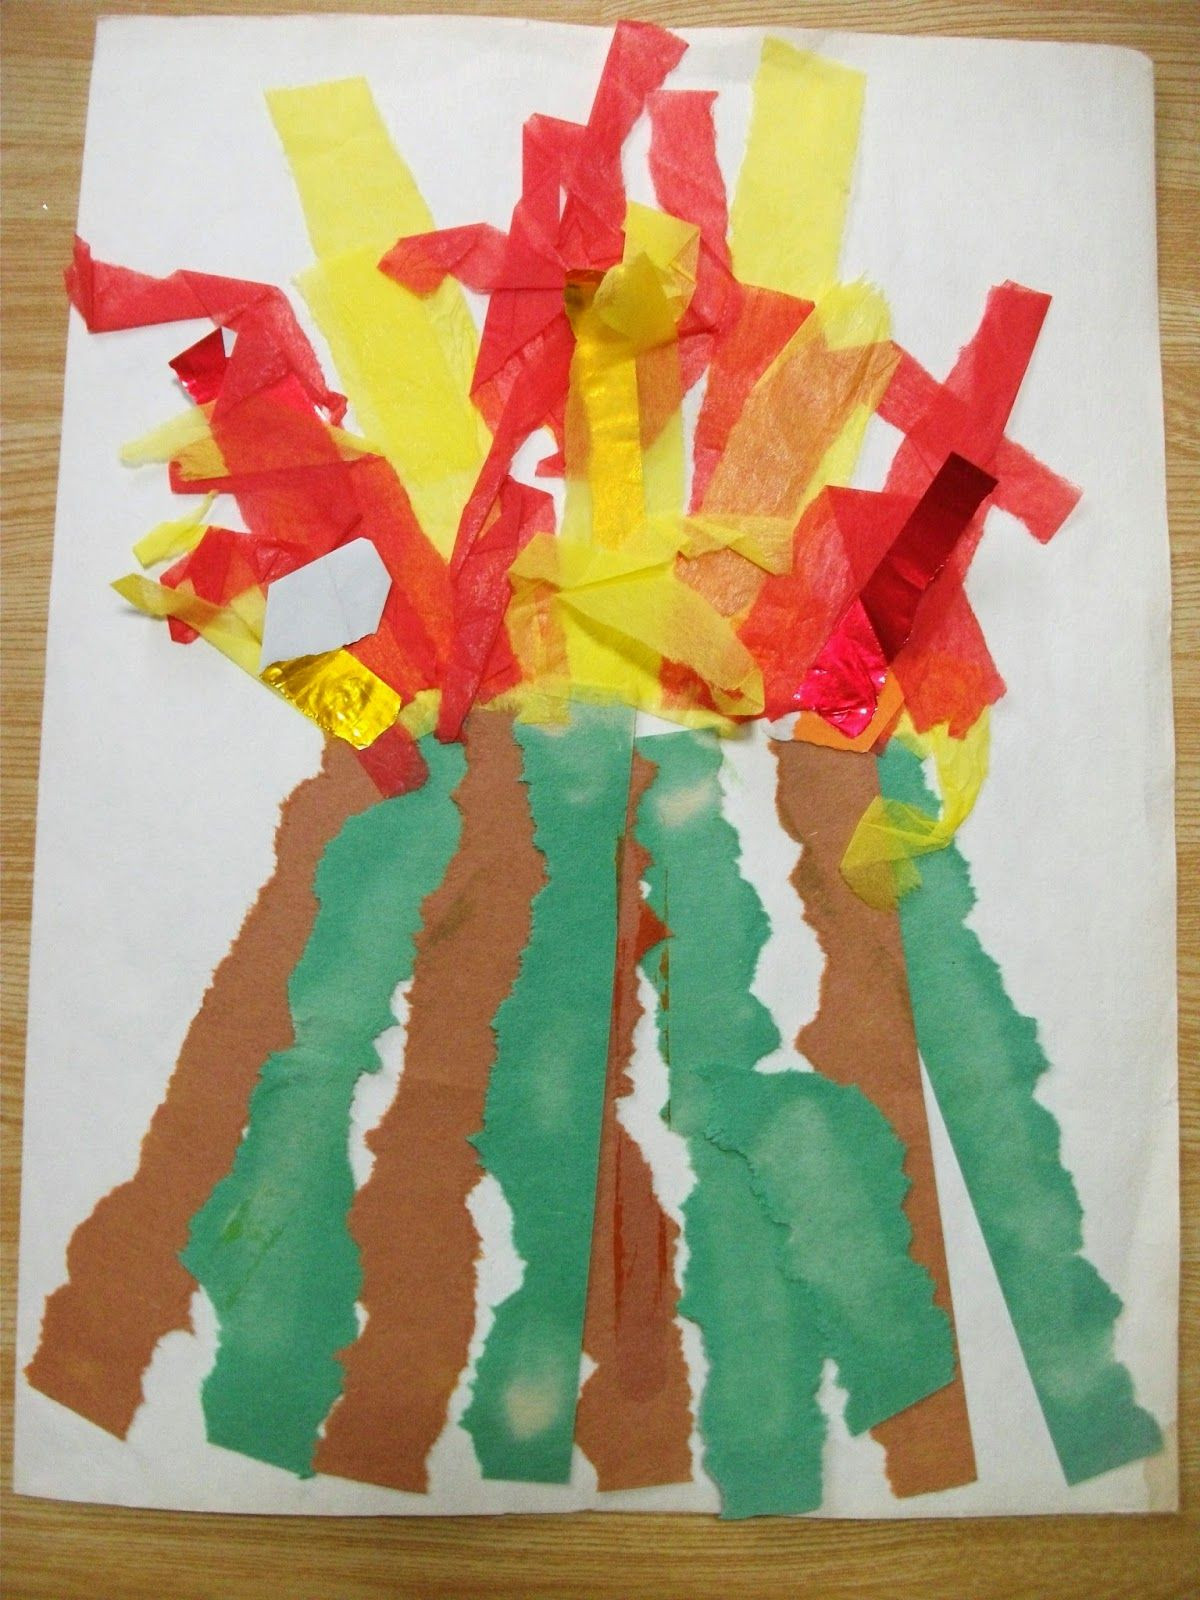 Preschool Artwork Ideas
 Preschool Crafts for Kids Paper Strips Volcano Craft